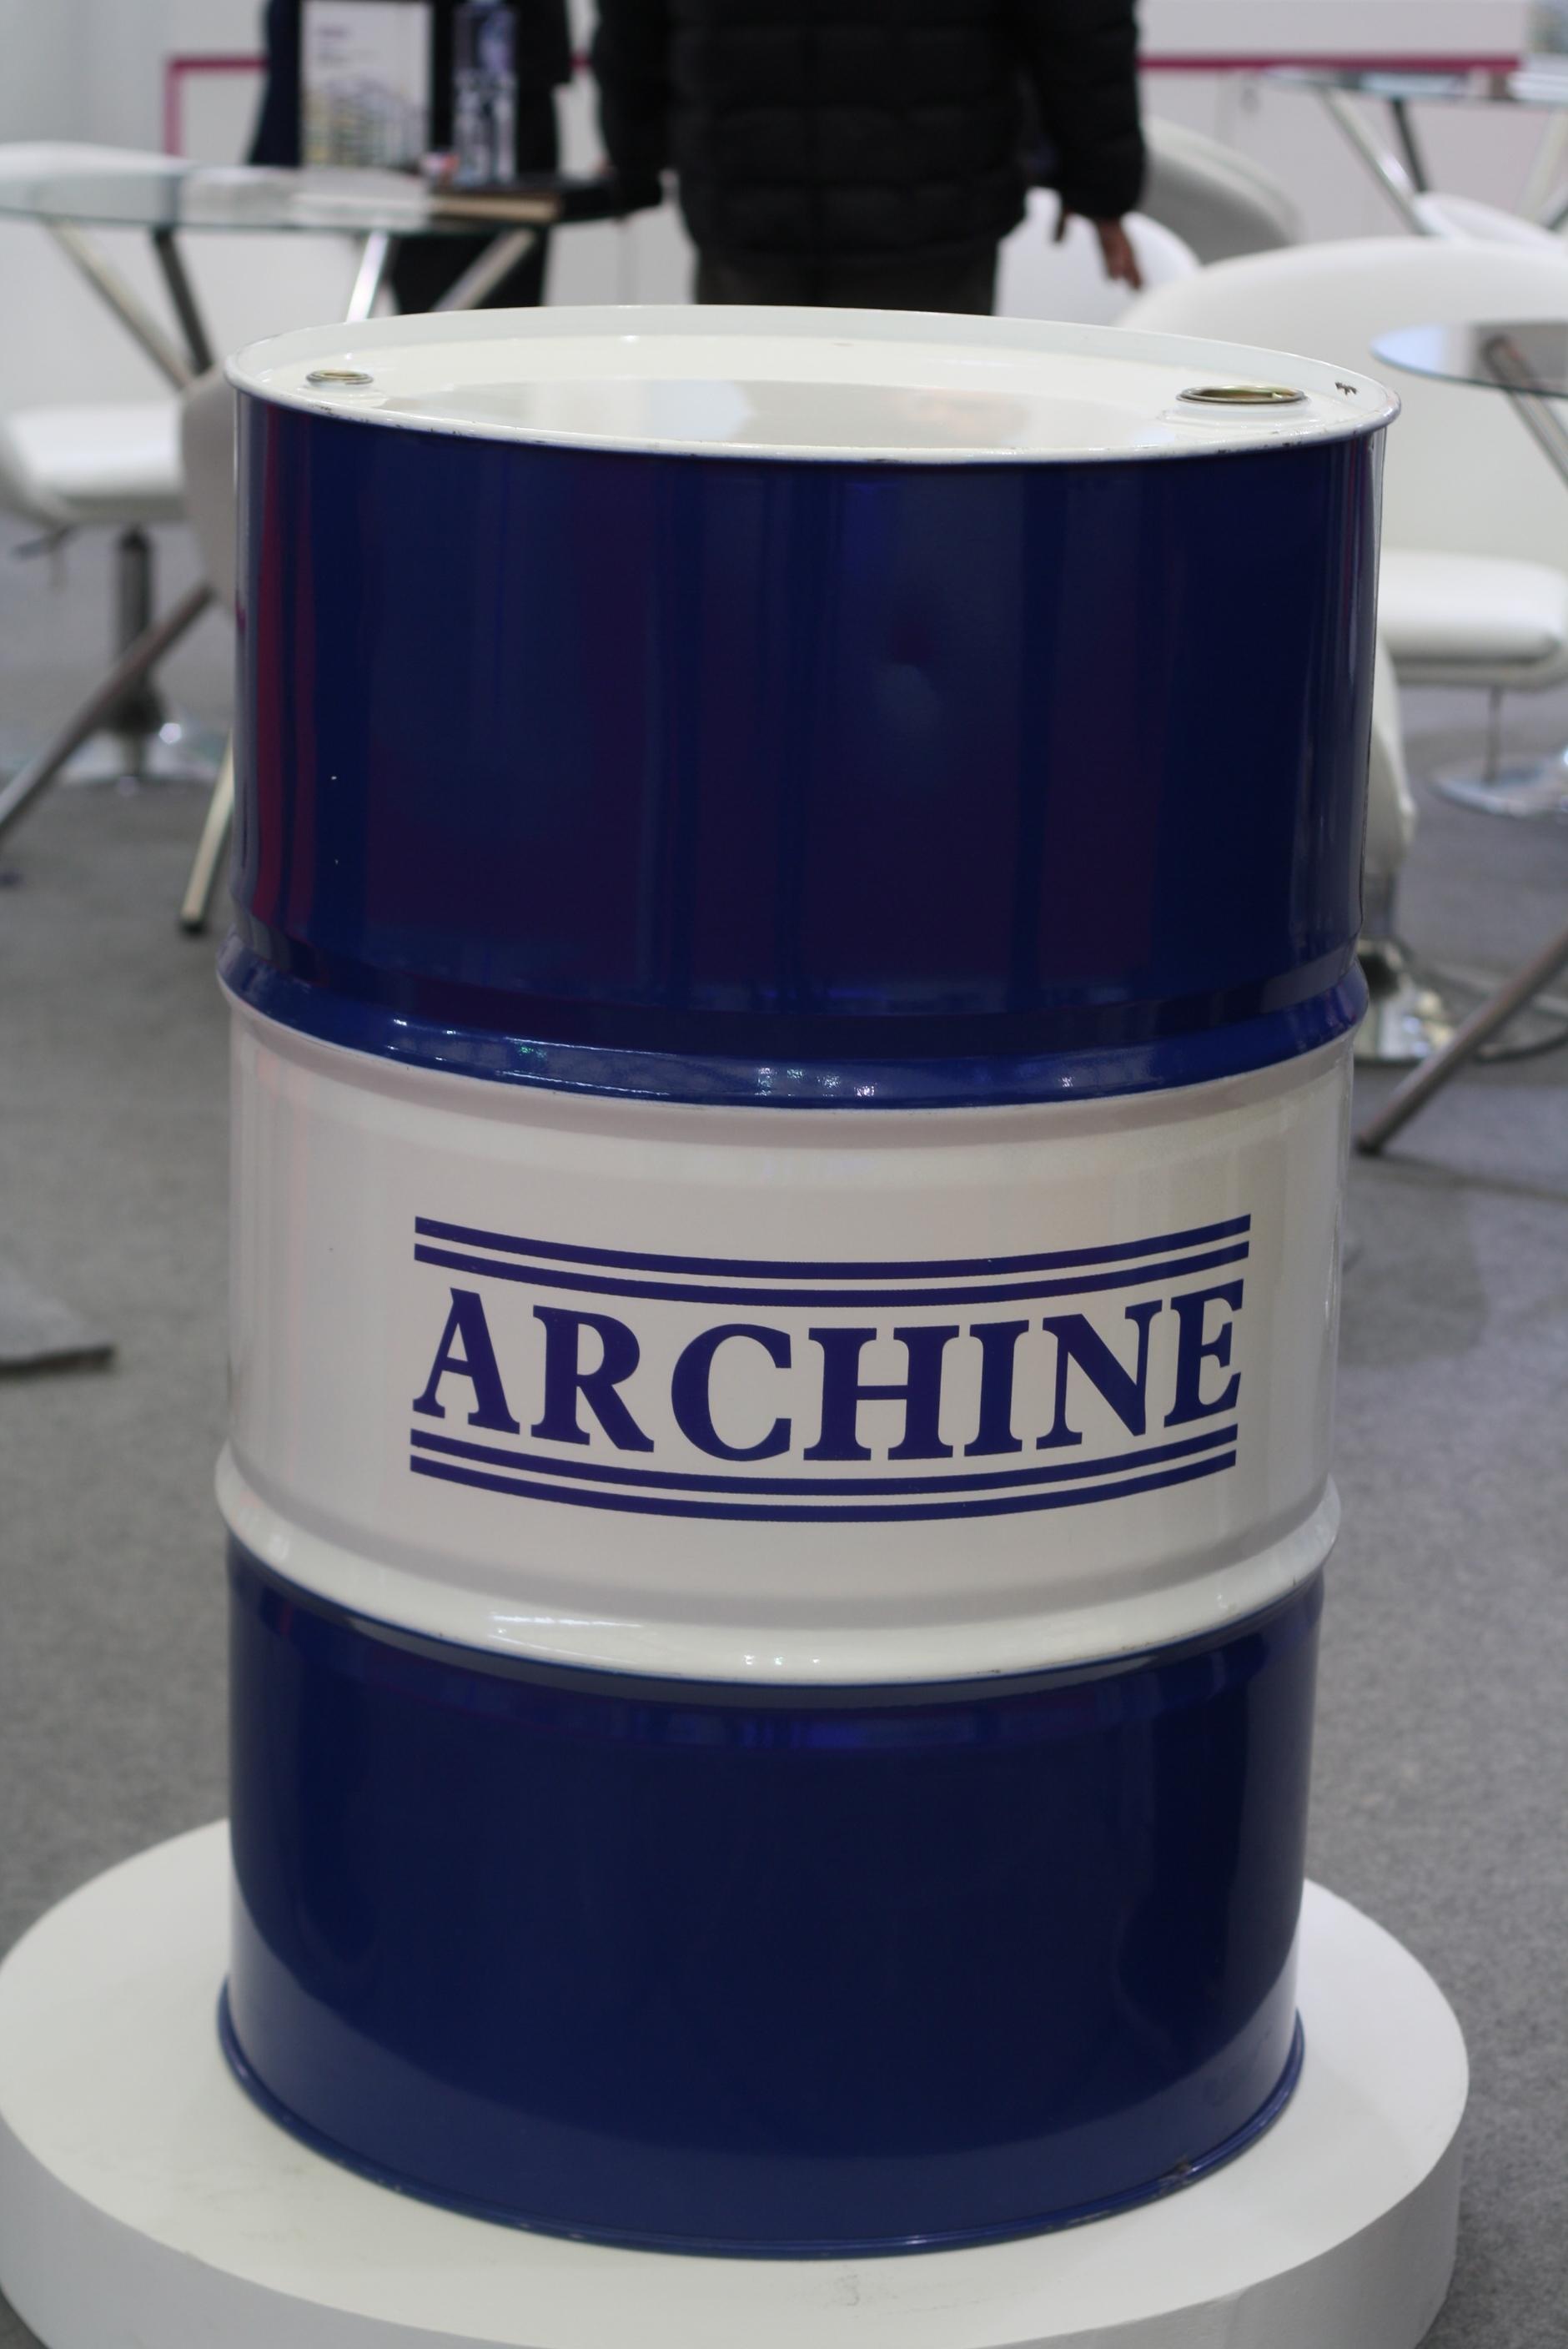 ArChine Geartek SP 460